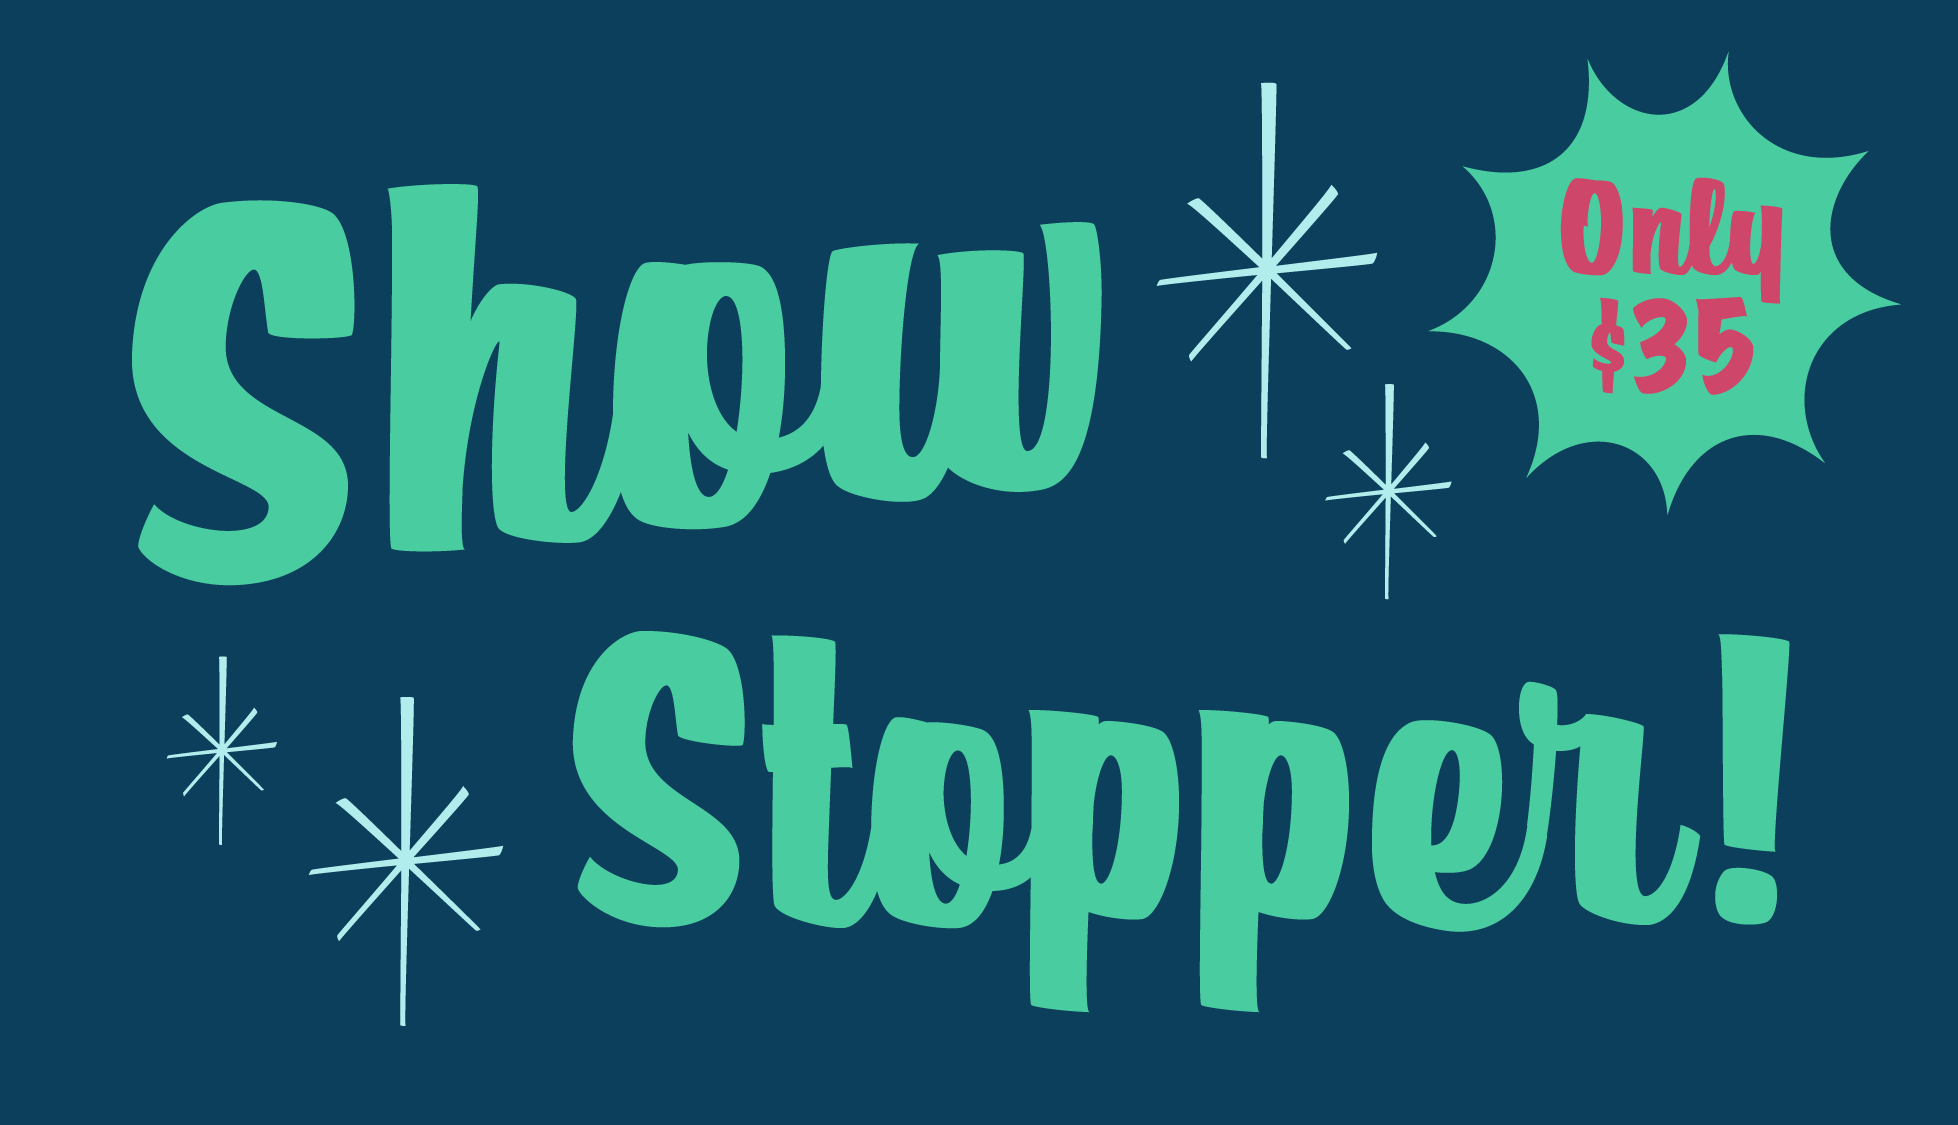 Show Stopper font